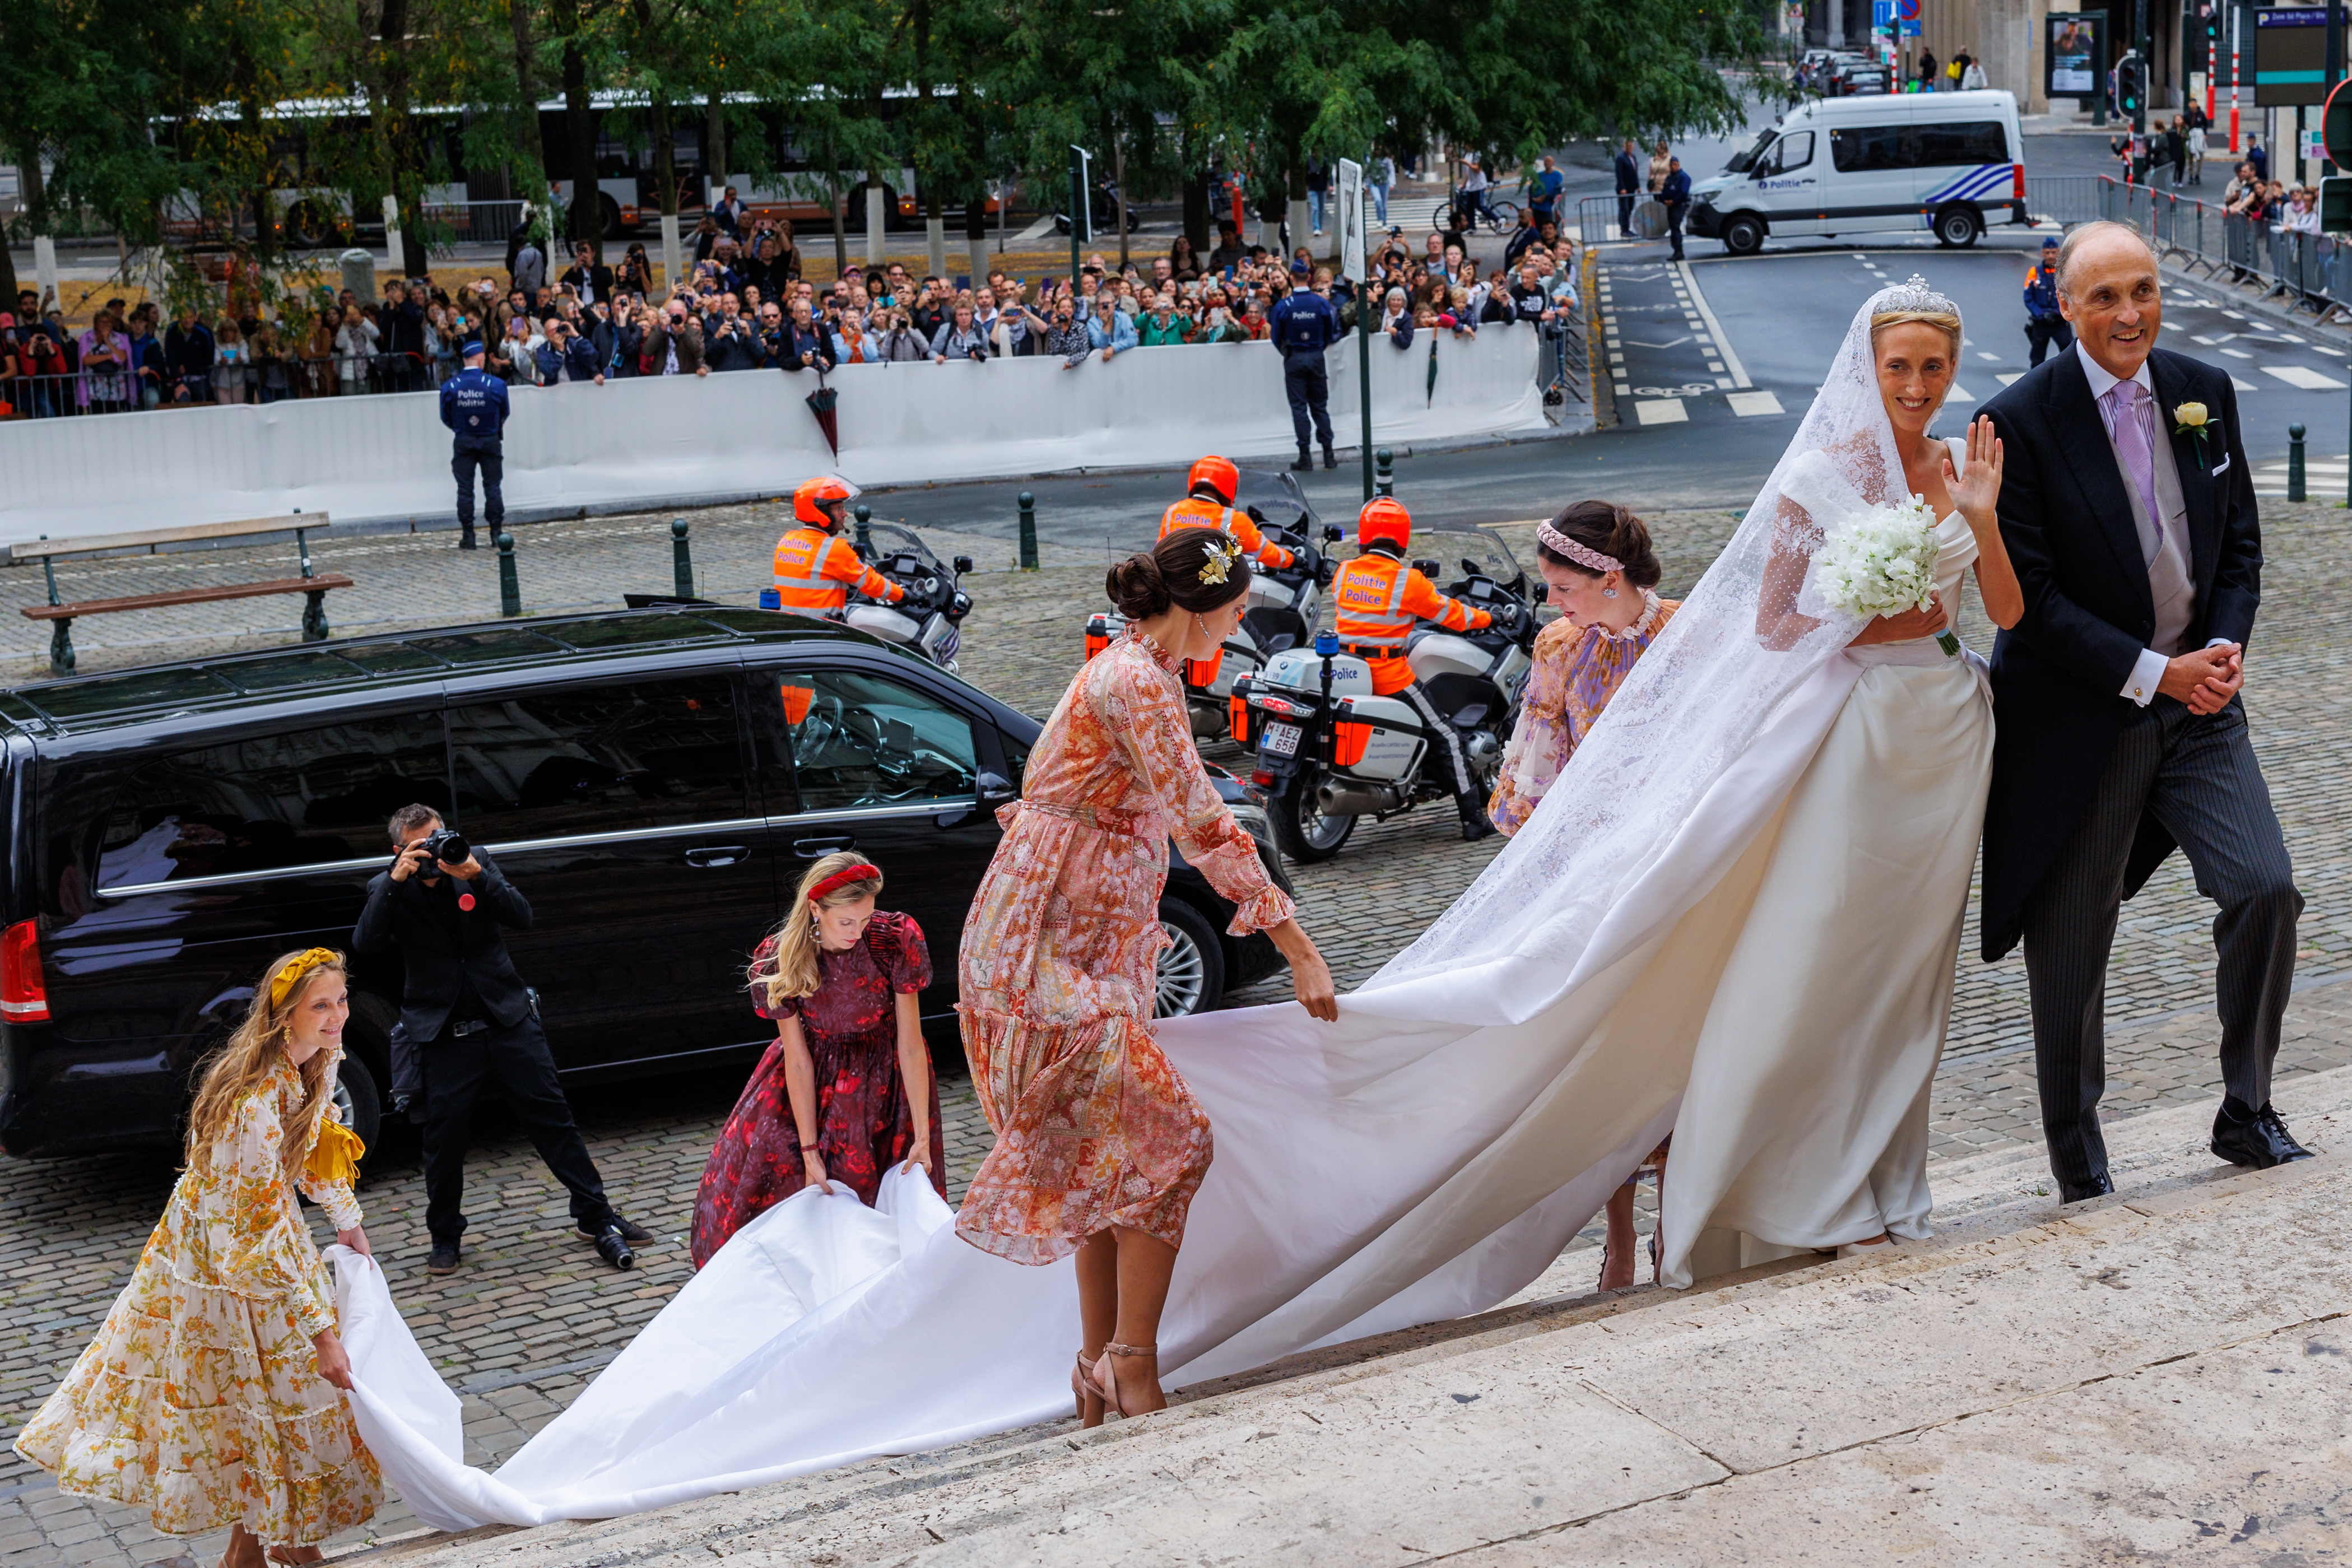 Wedding of Princess Maria Laura of Belgium.